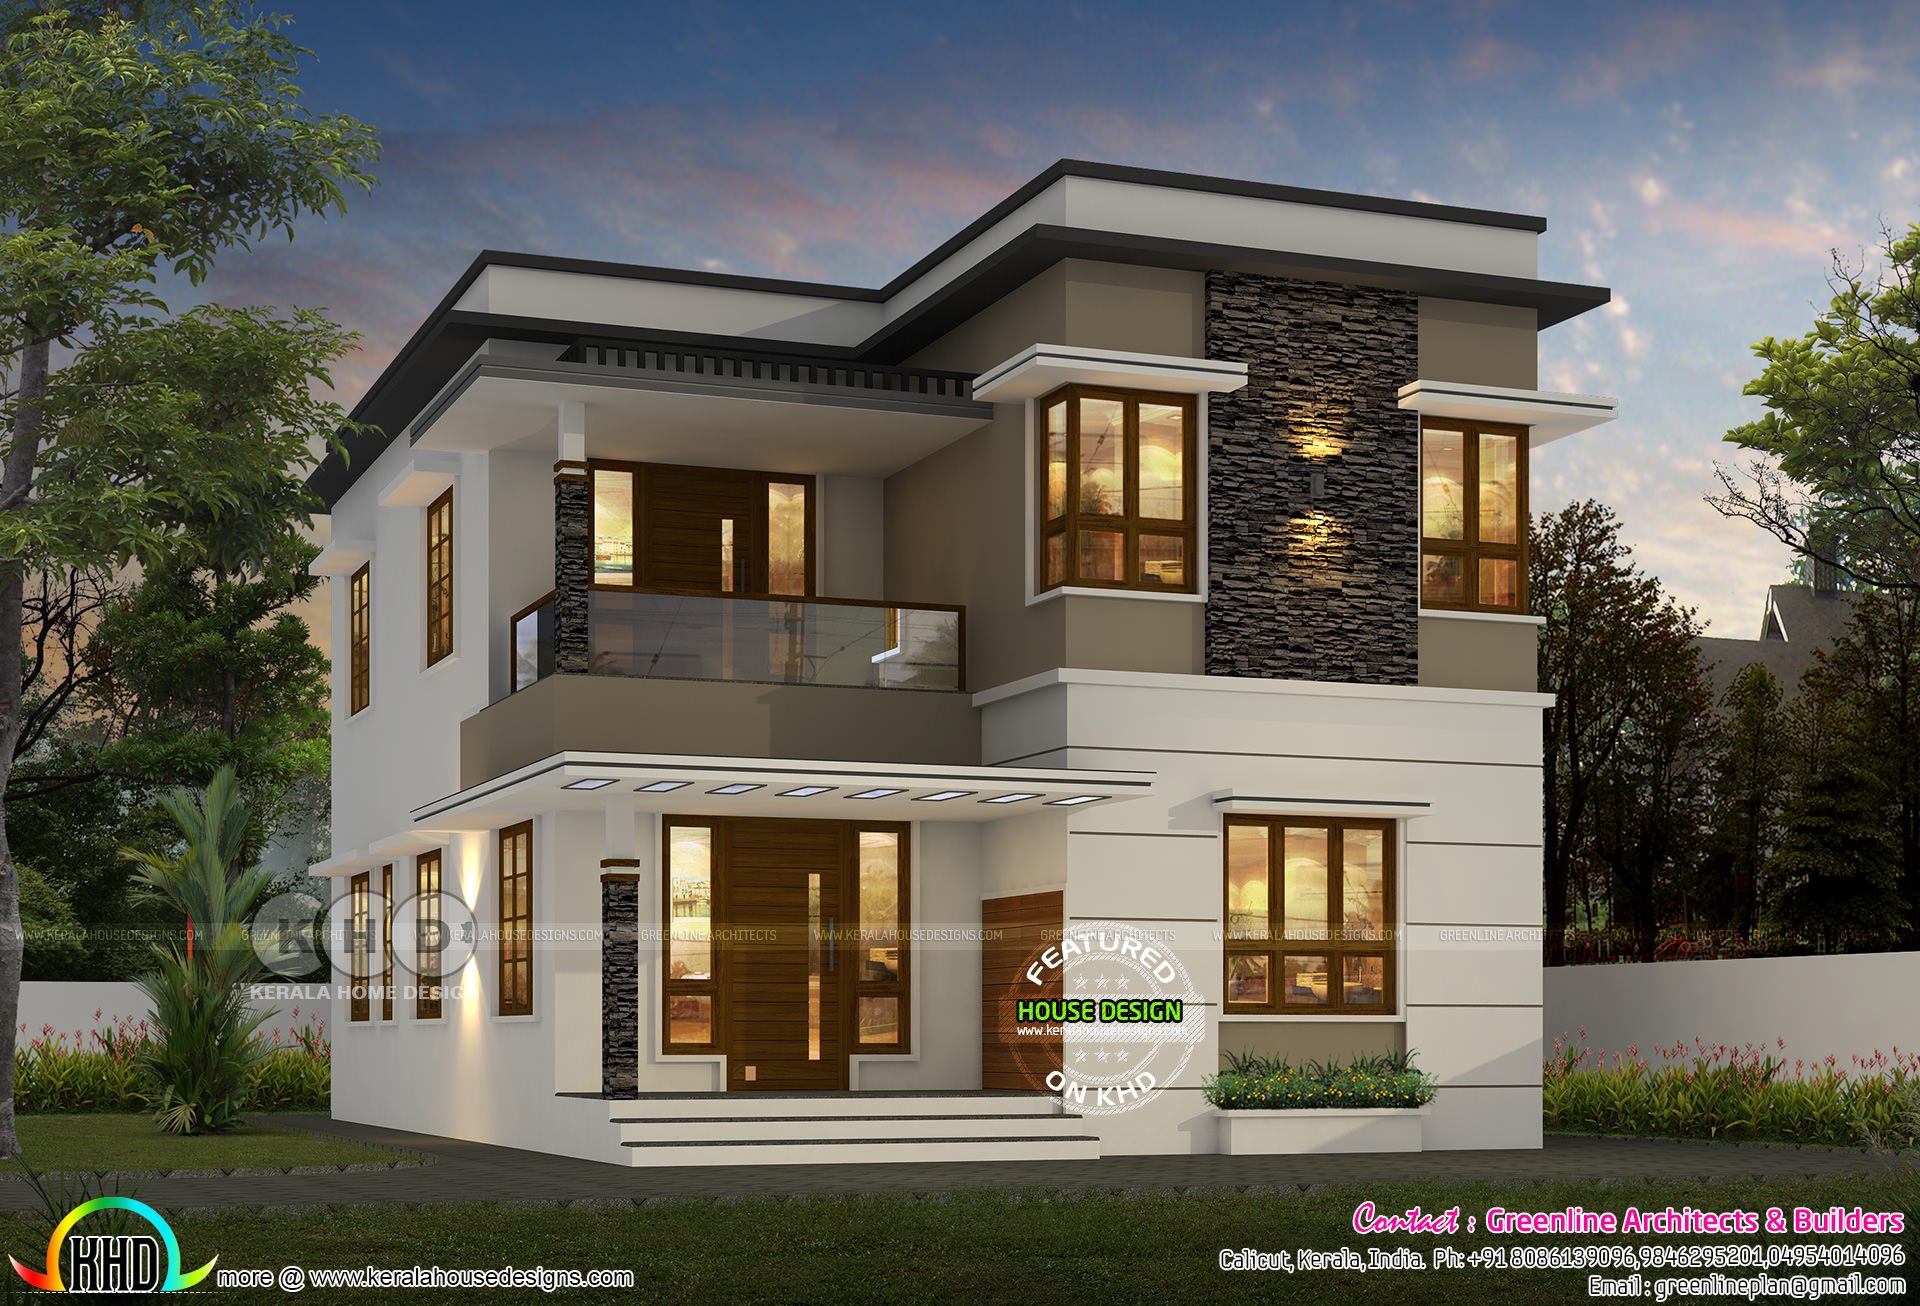  1600  sq  ft  4 bedroom modern  flat roof house  Kerala home  